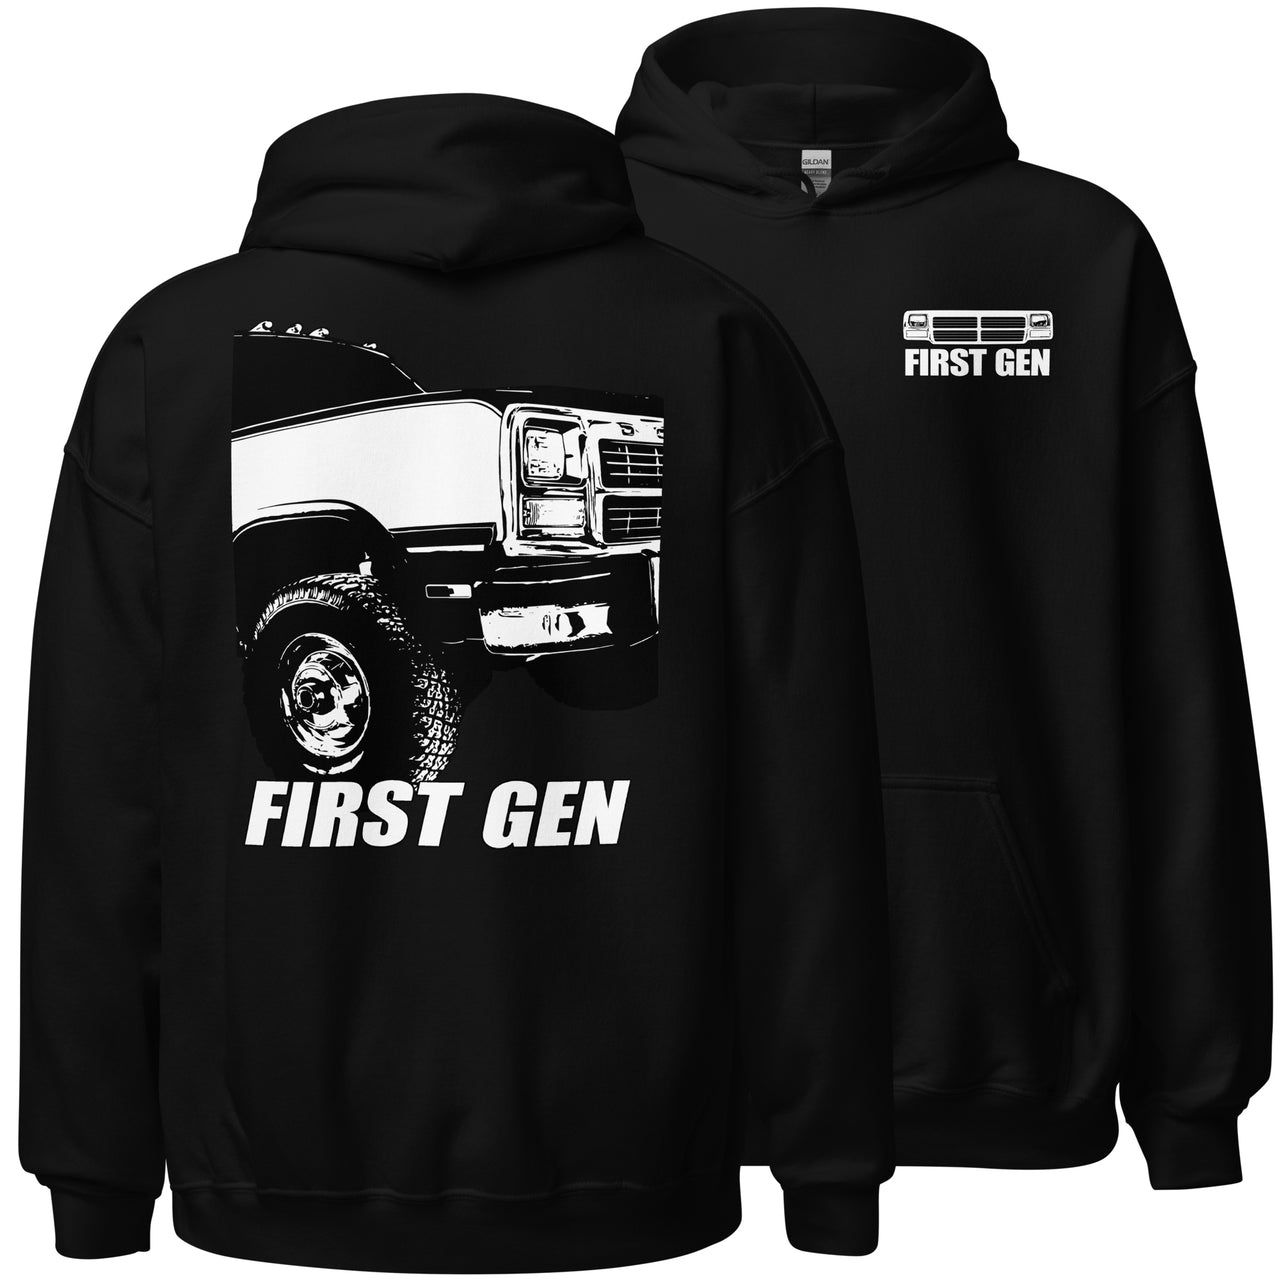 First Gen Truck Hoodie Sweatshirt With Close Up Design in black